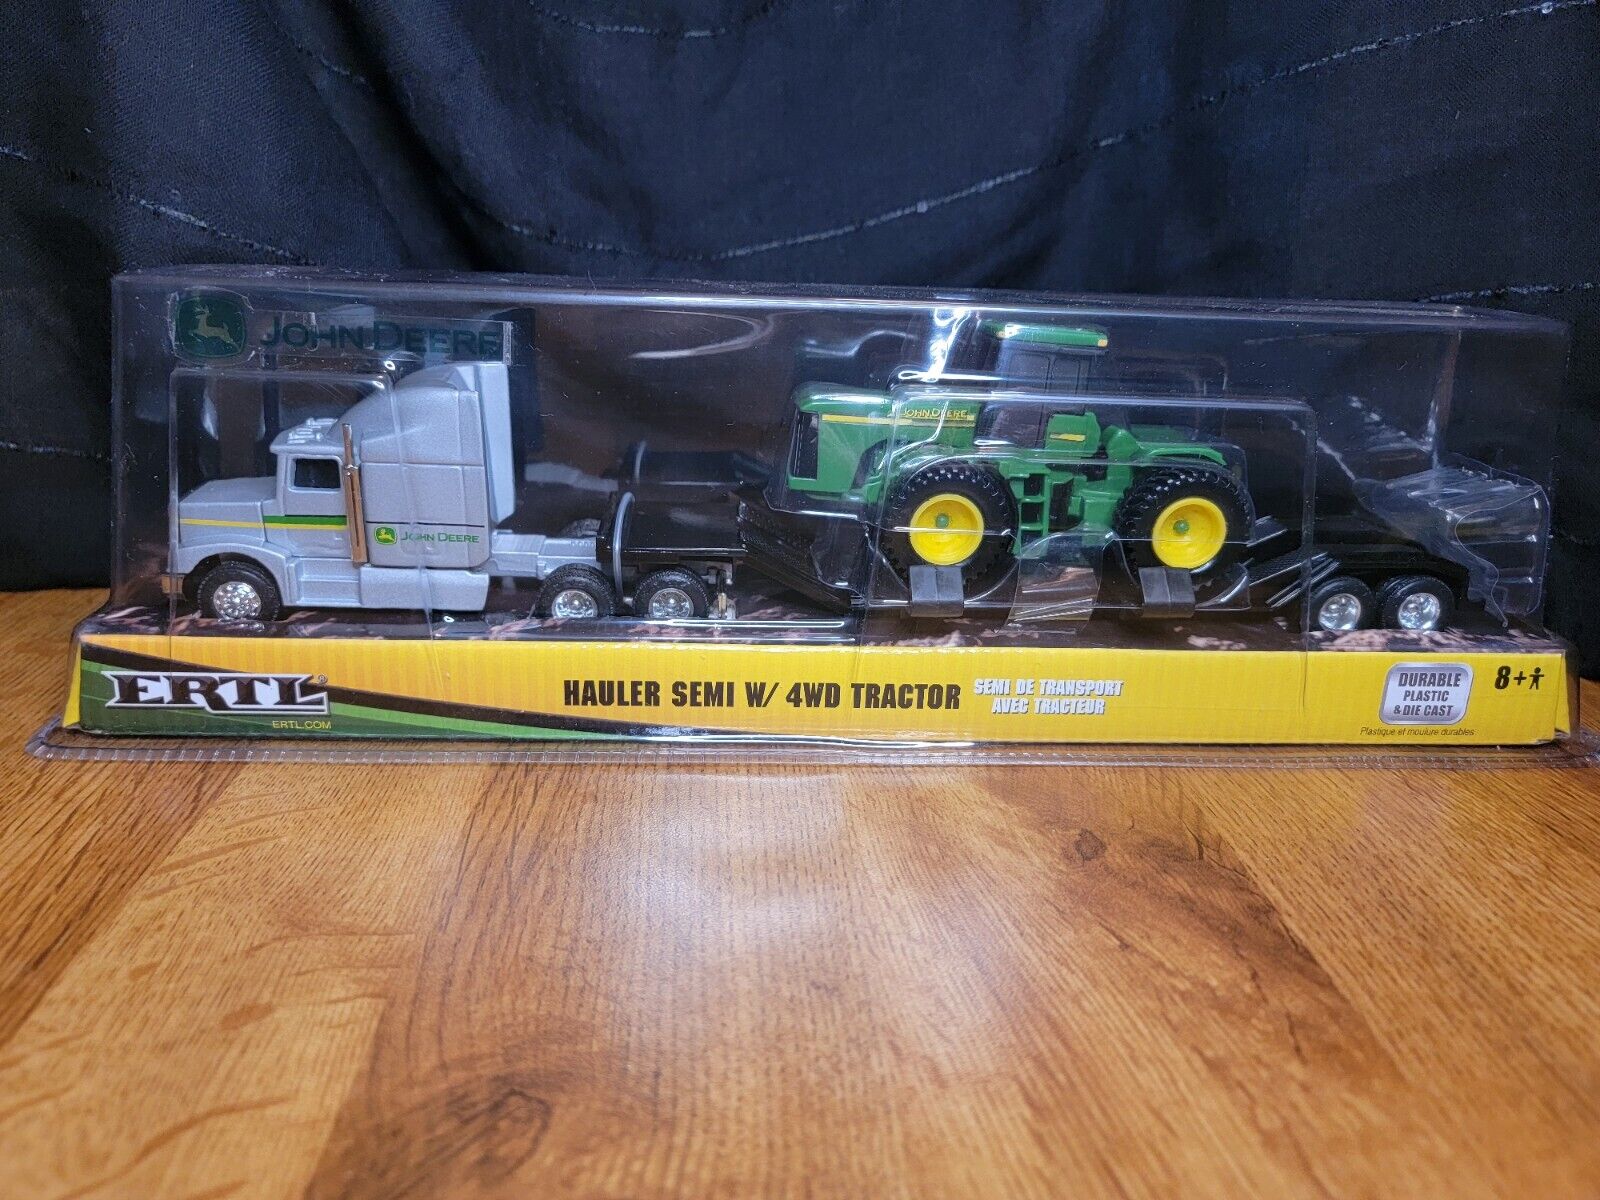 2007 ERTL John Deere Hauler Semi W/ 4WD Tractor Farm Toy NEW In Box Age 8+